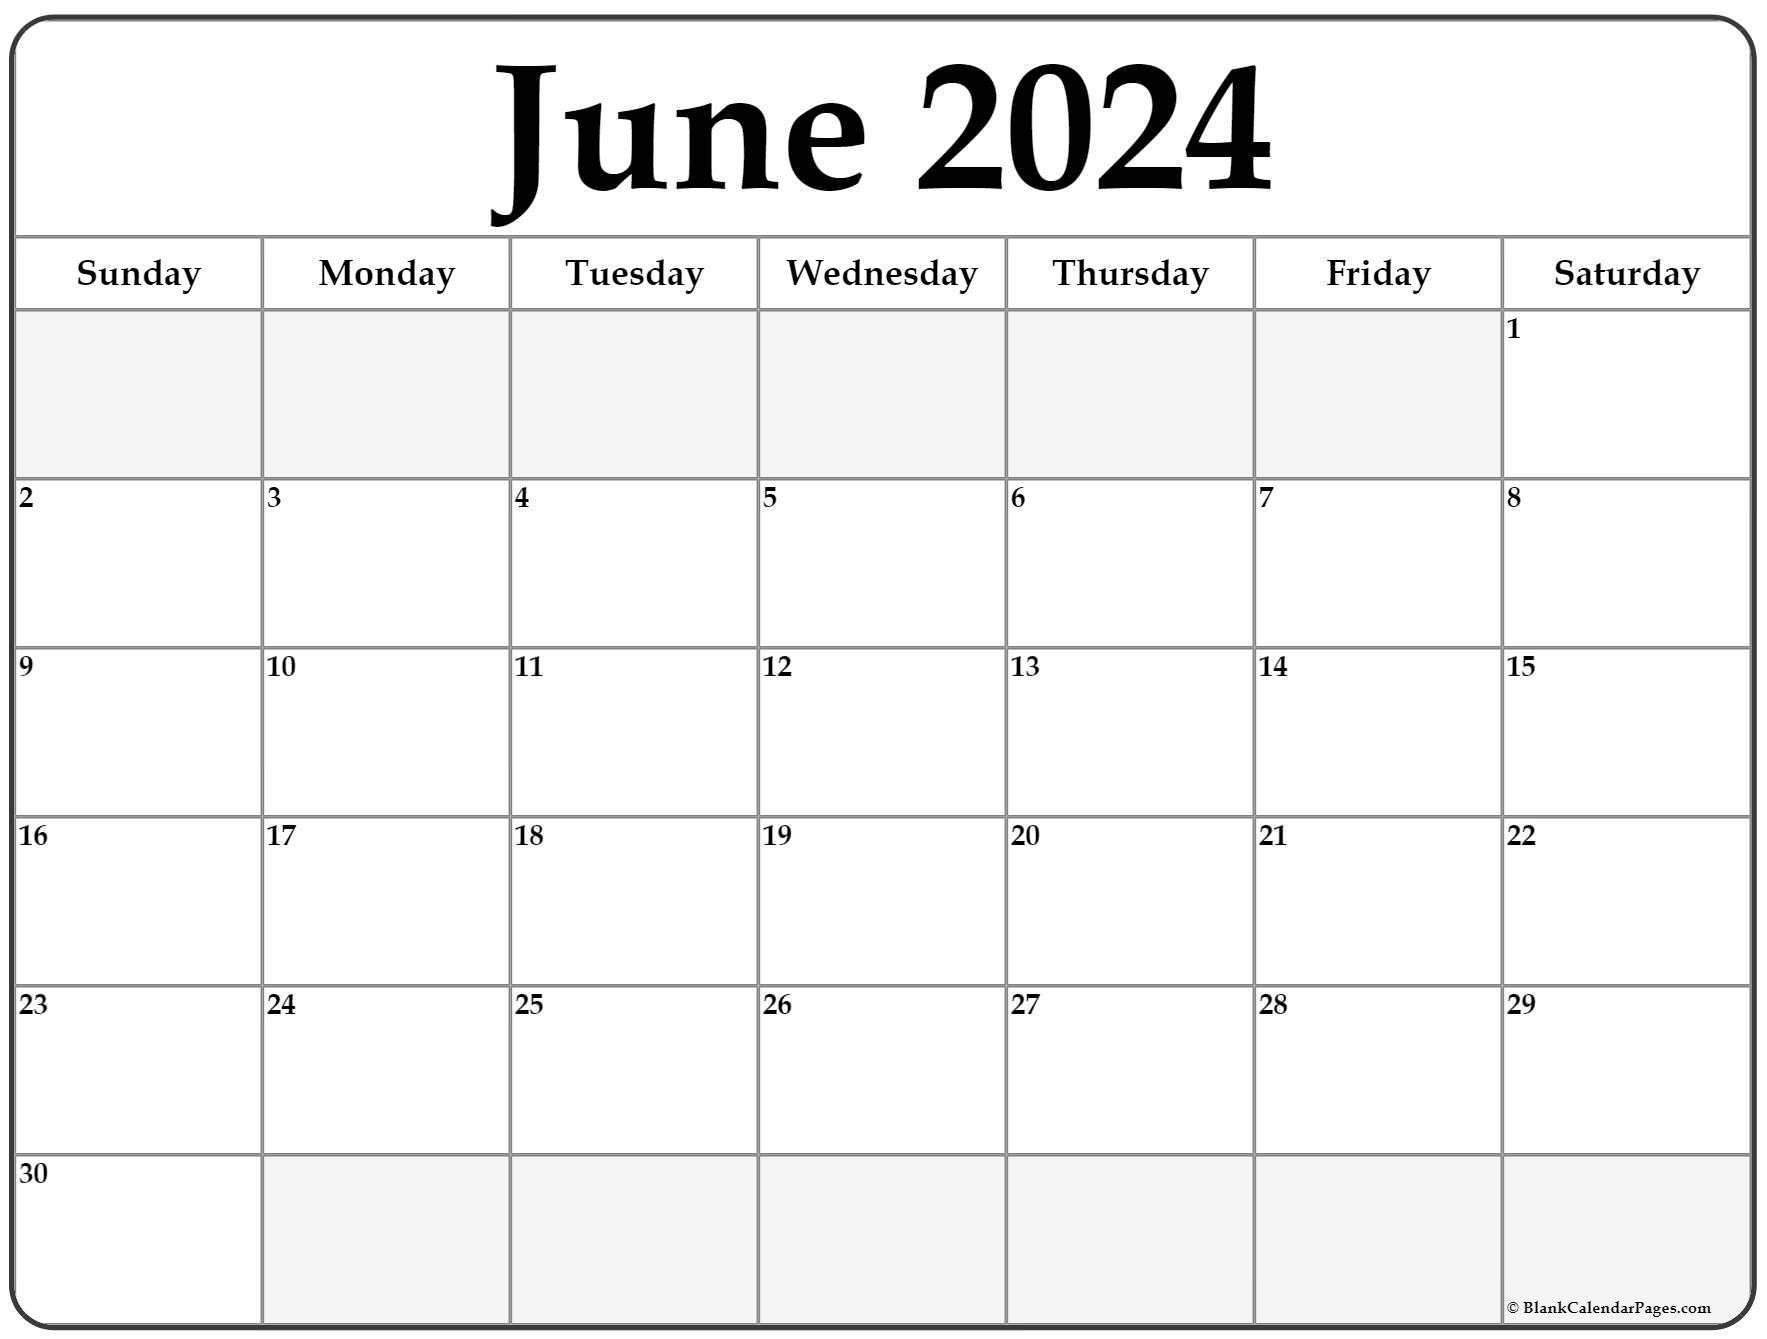 June 2024 calendar | free printable calendar